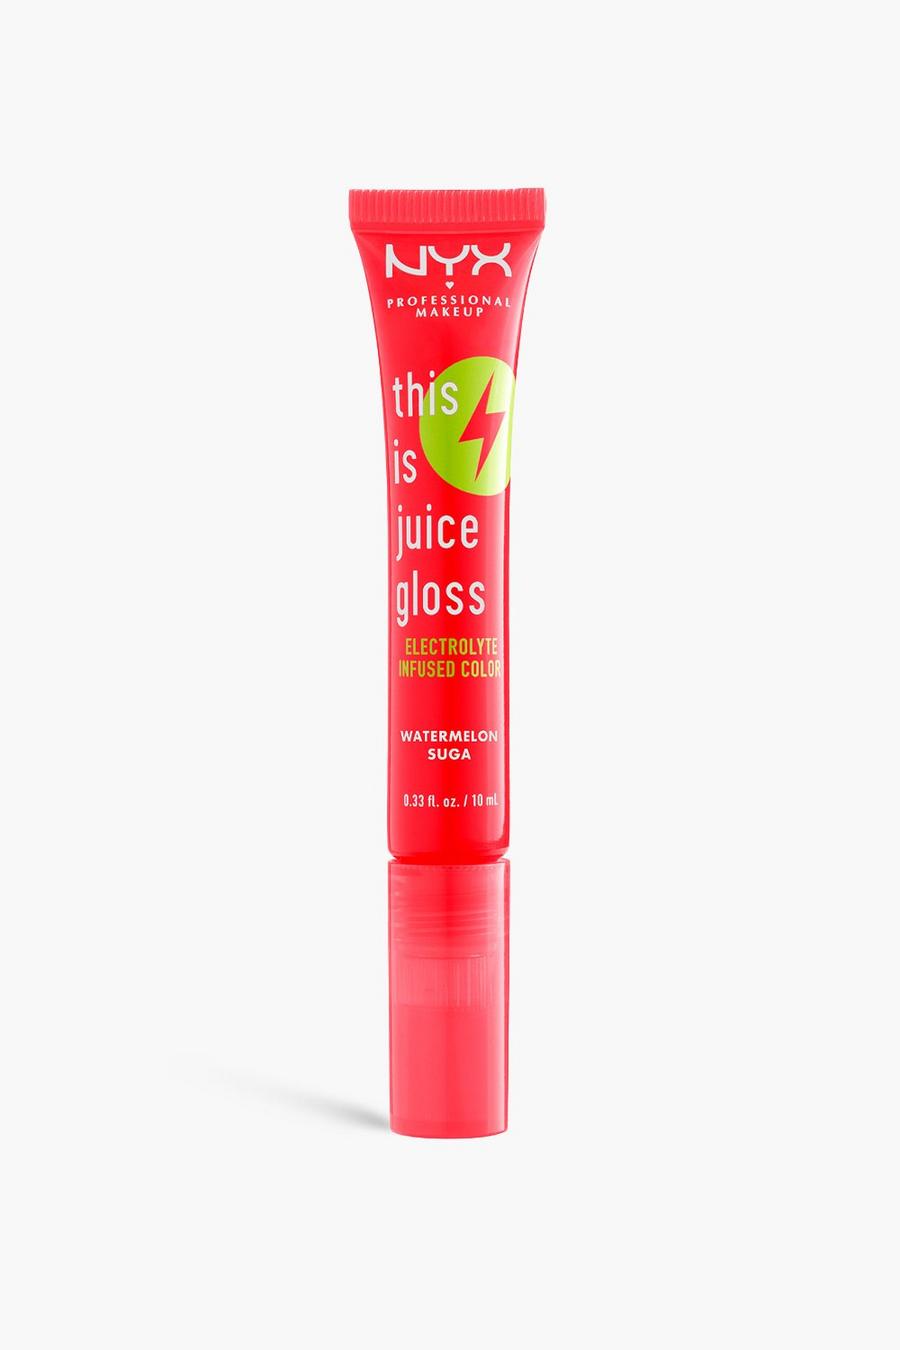 02 watermelon suga NYX Professional Makeup This Is Juice Gloss